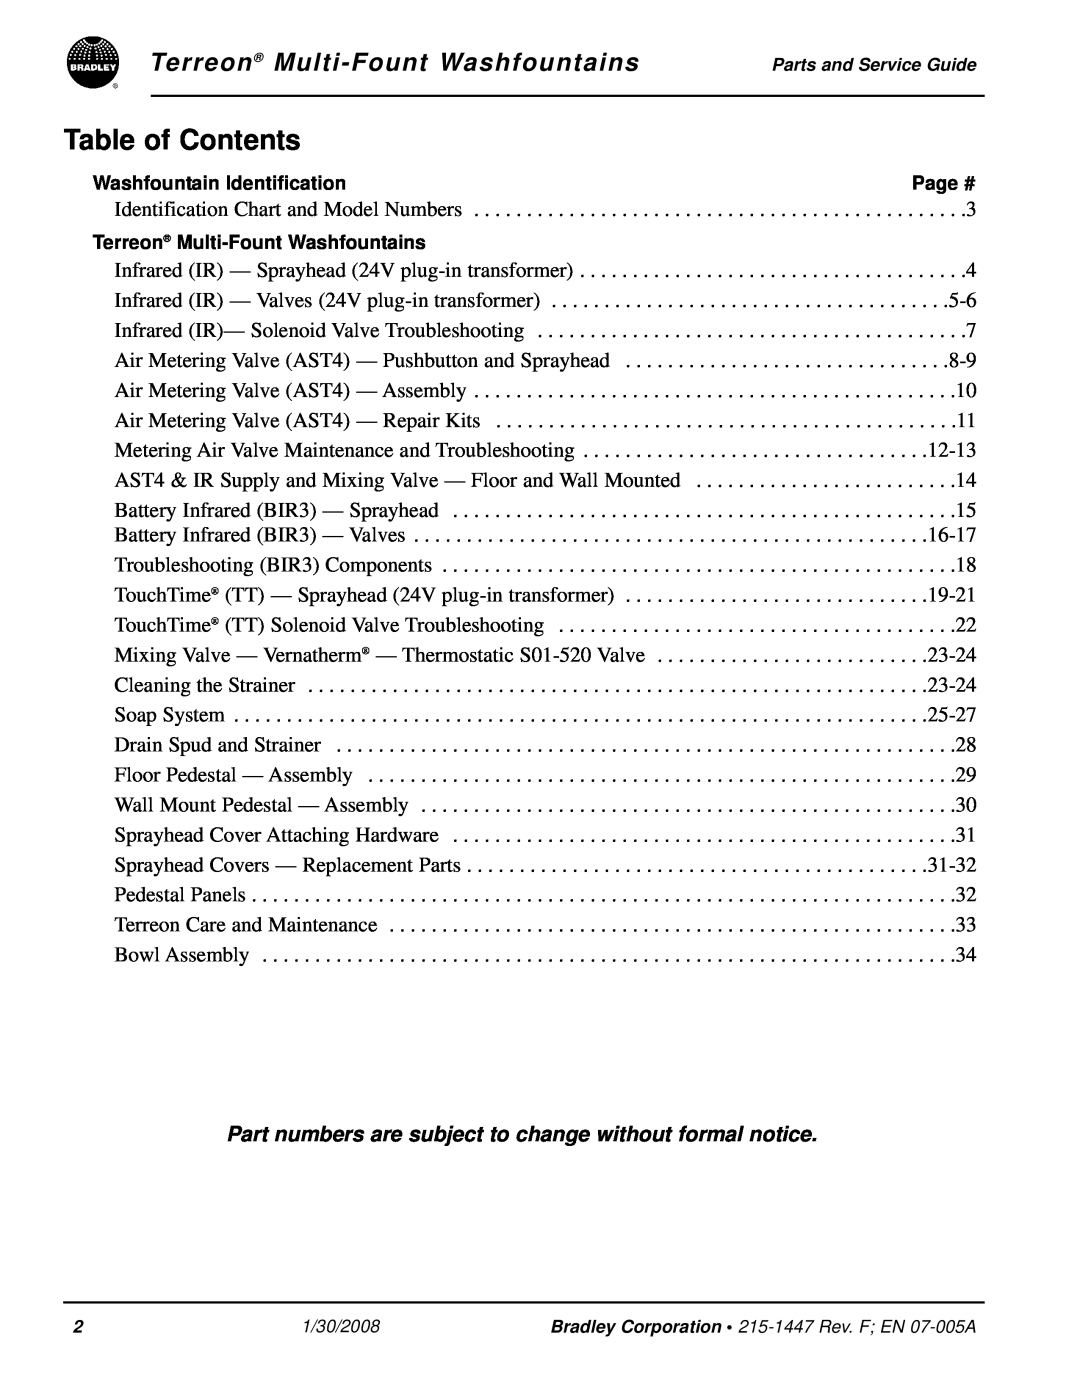 Bradley Smoker Indoor Furnishings manual Table of Contents, Terreon Multi-FountWashfountains 